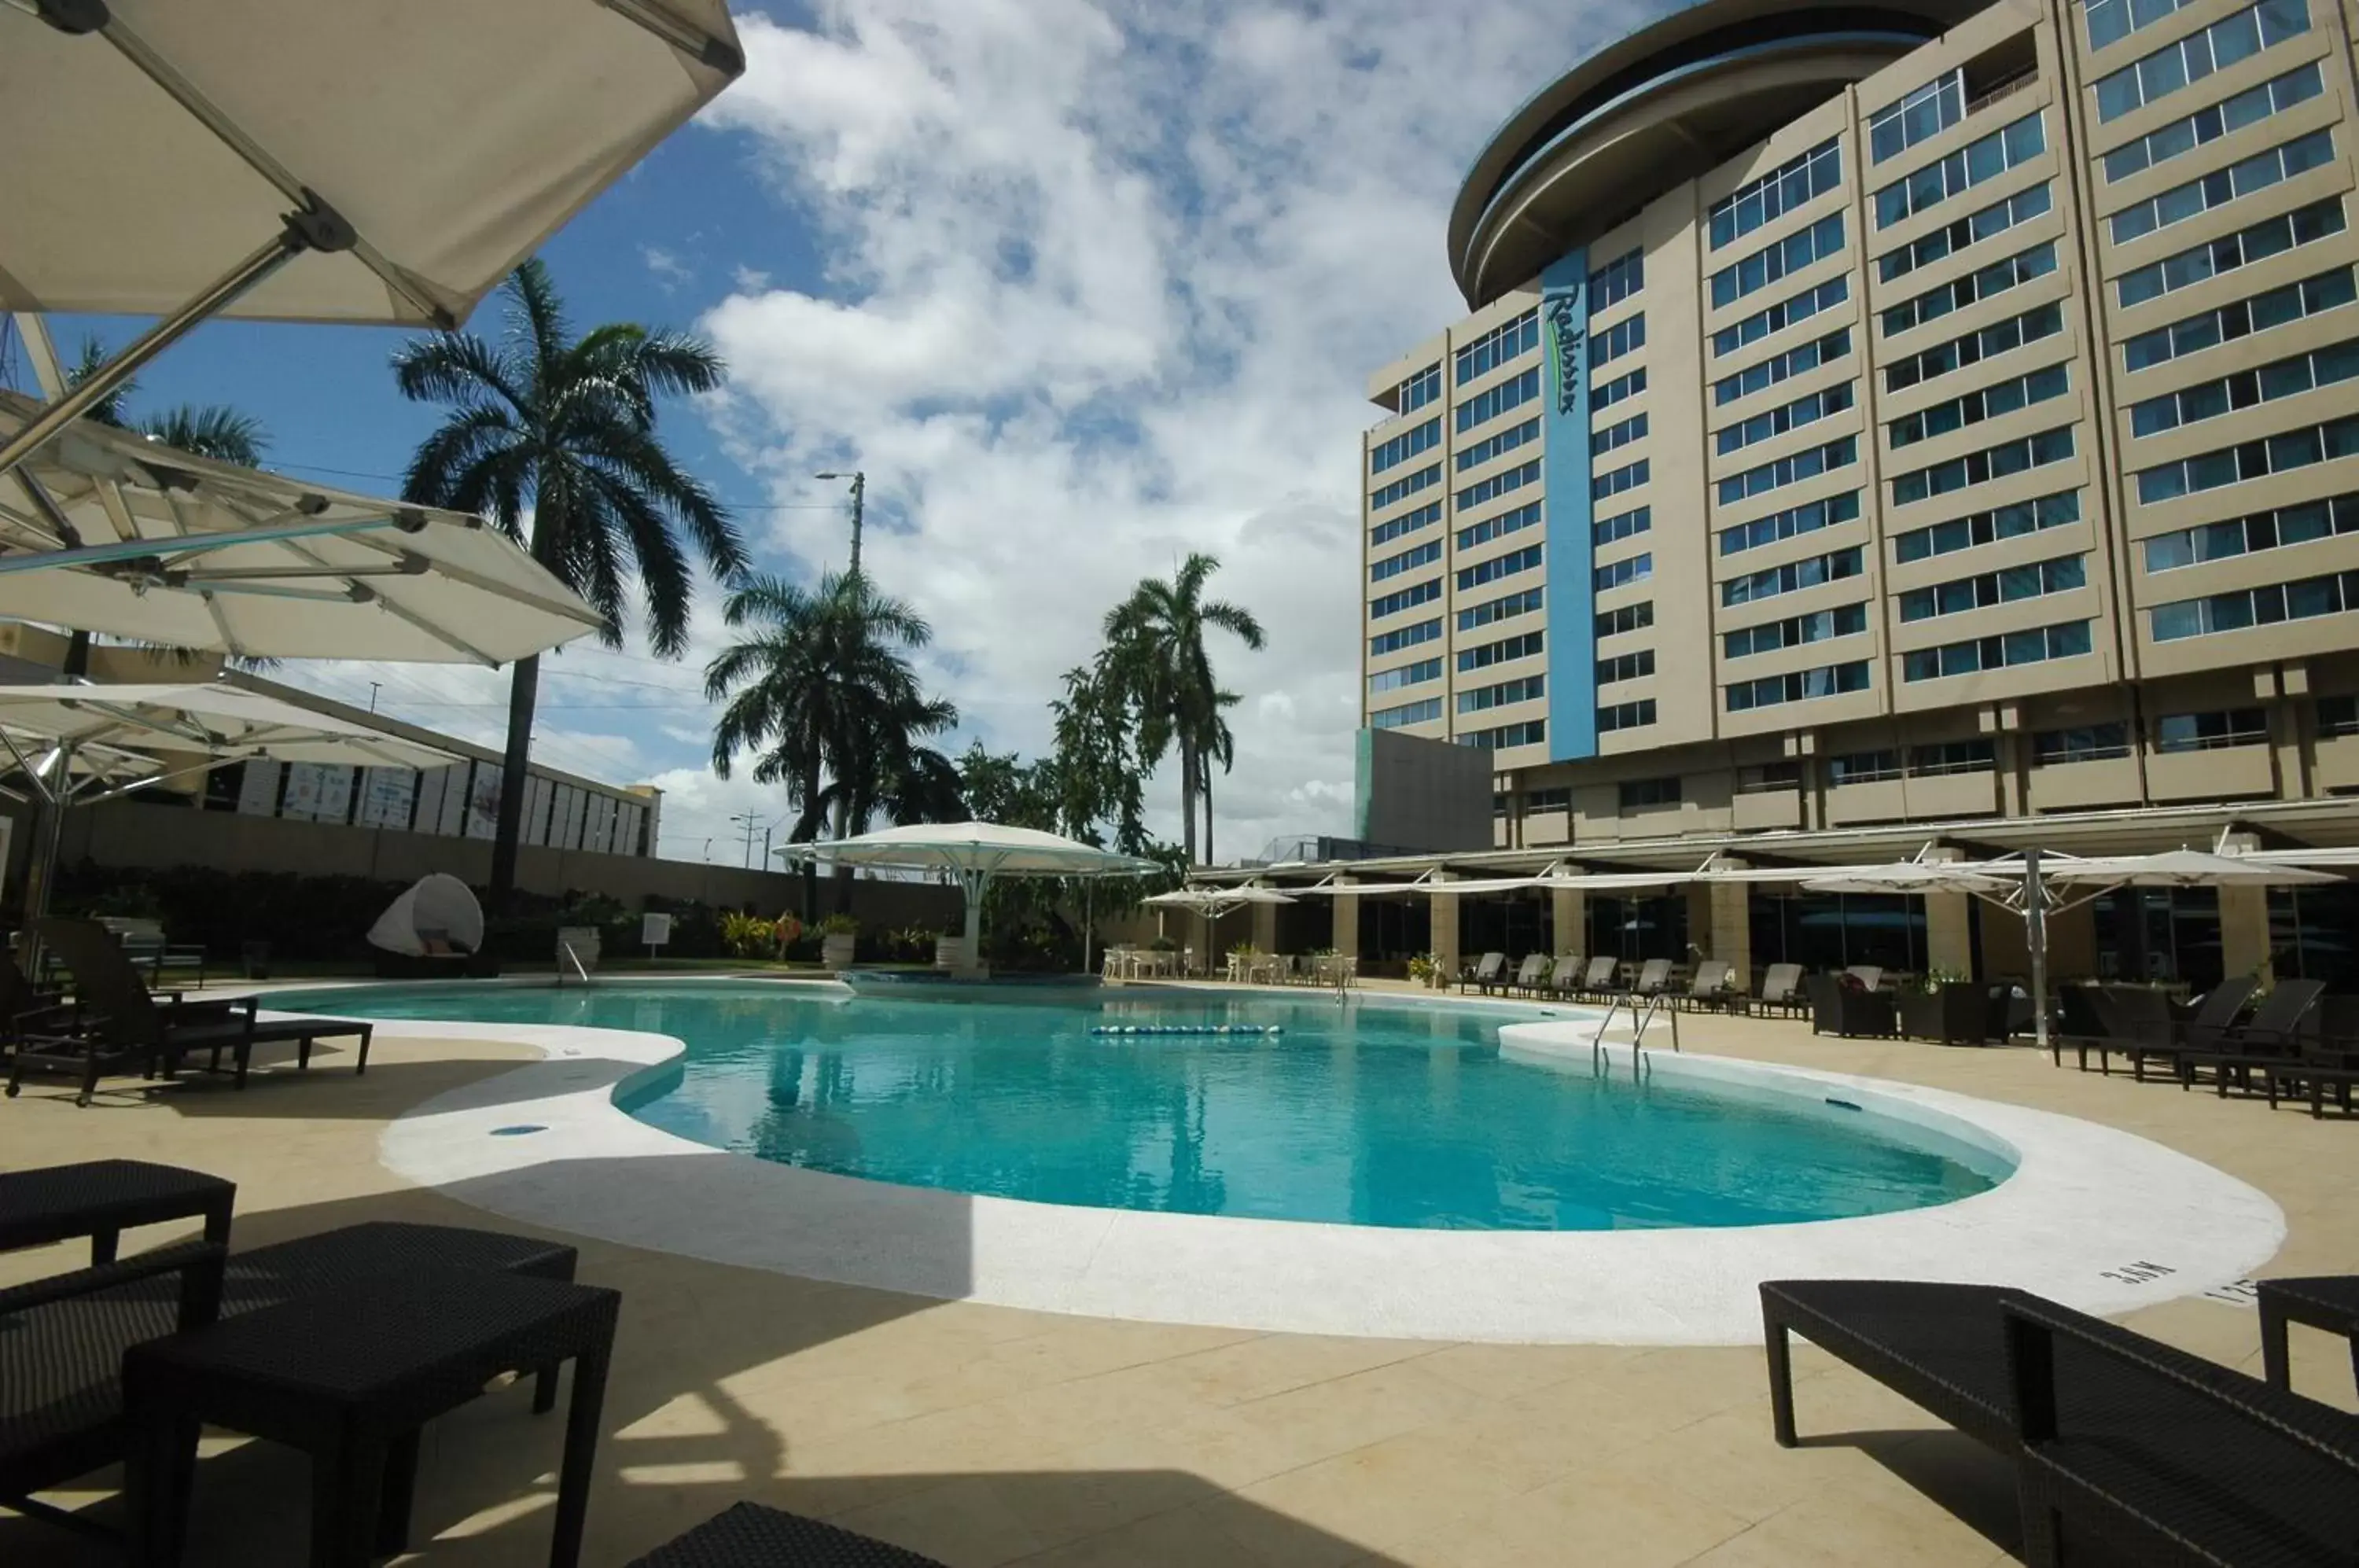 Swimming Pool in Radisson Hotel Trinidad